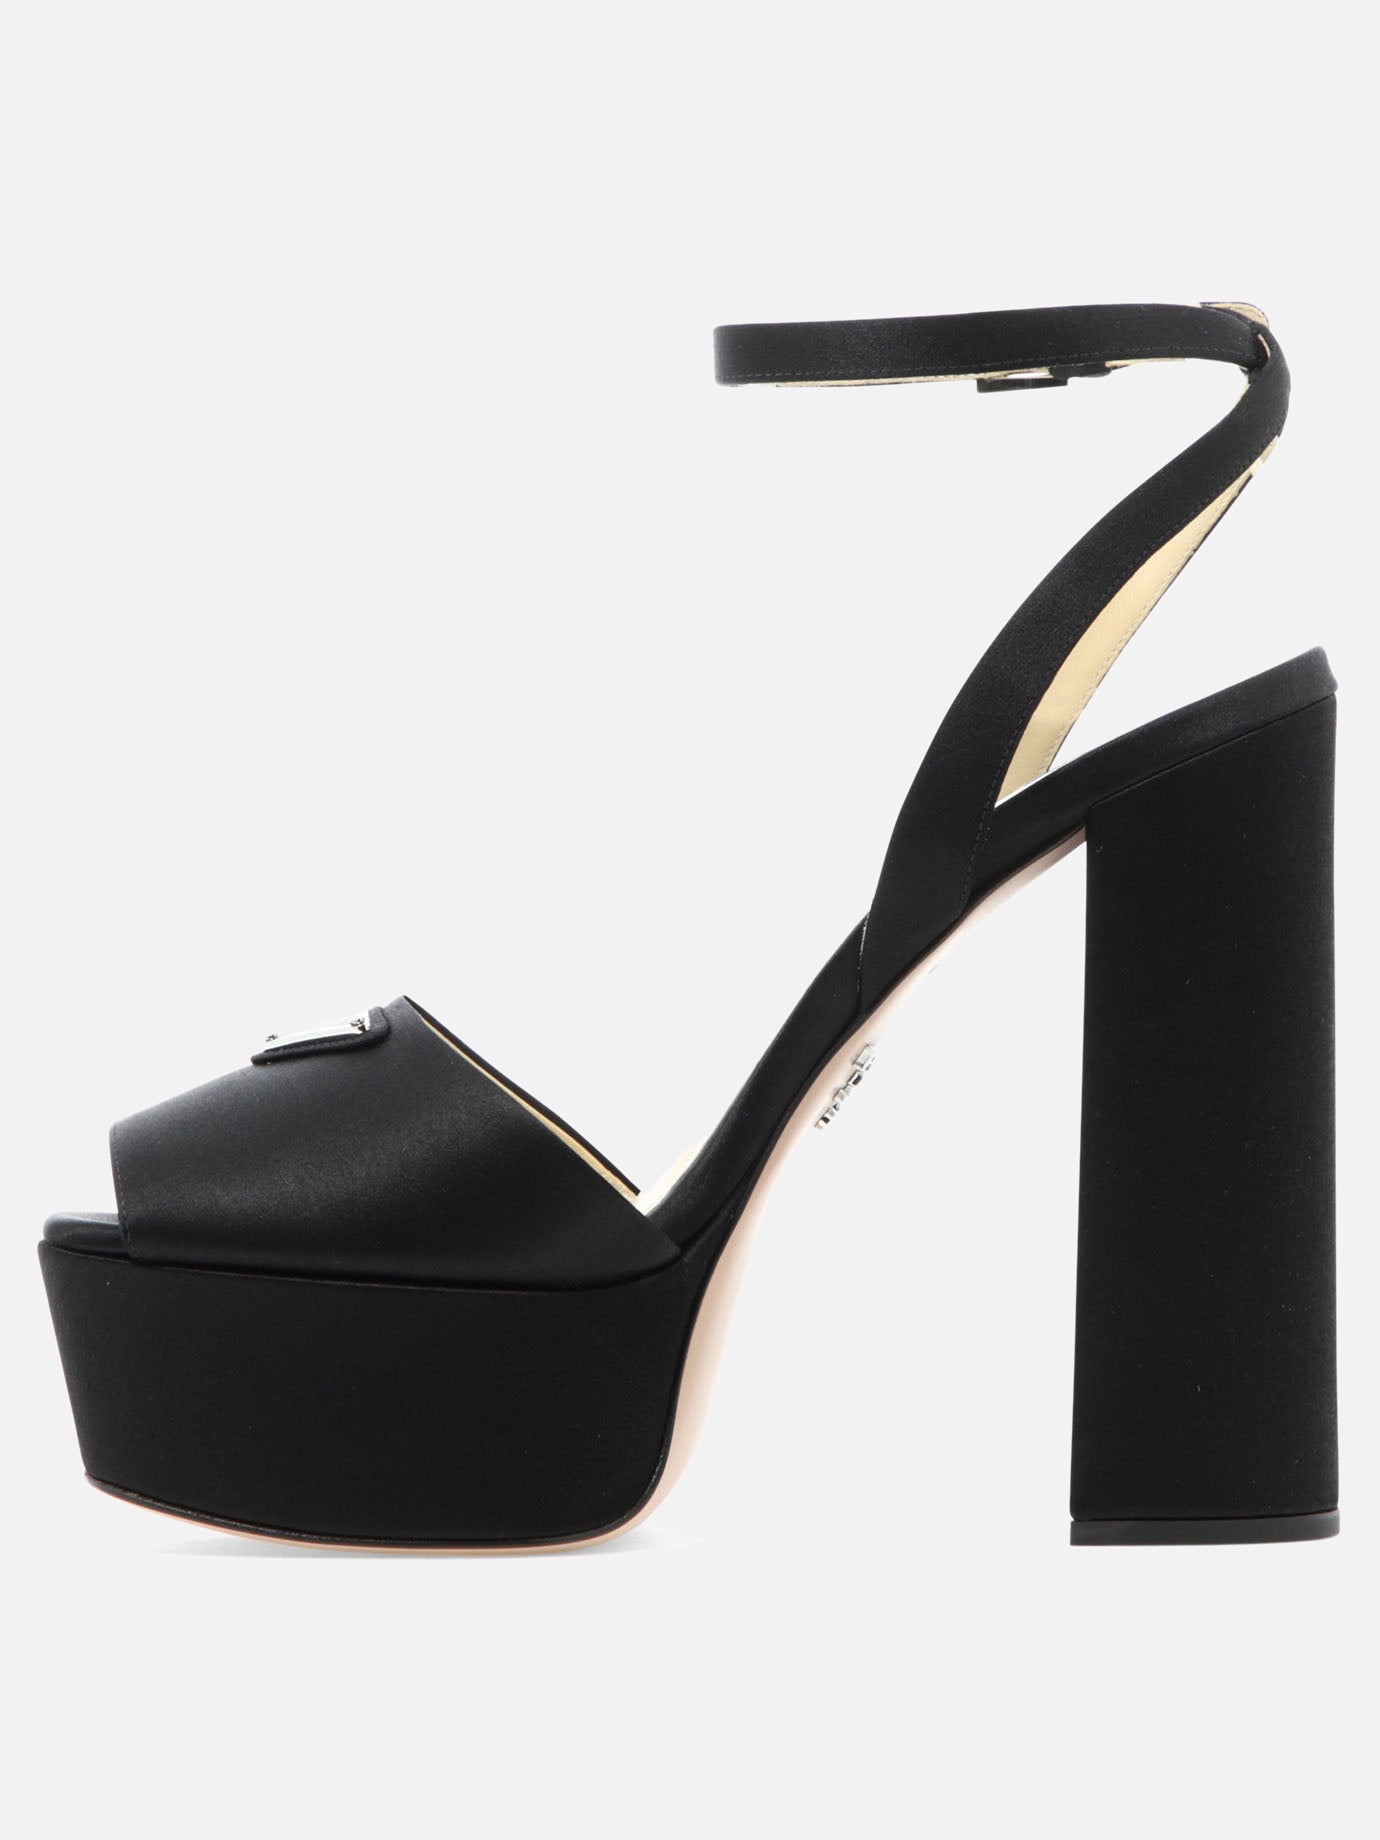 High-heeled satin sandals